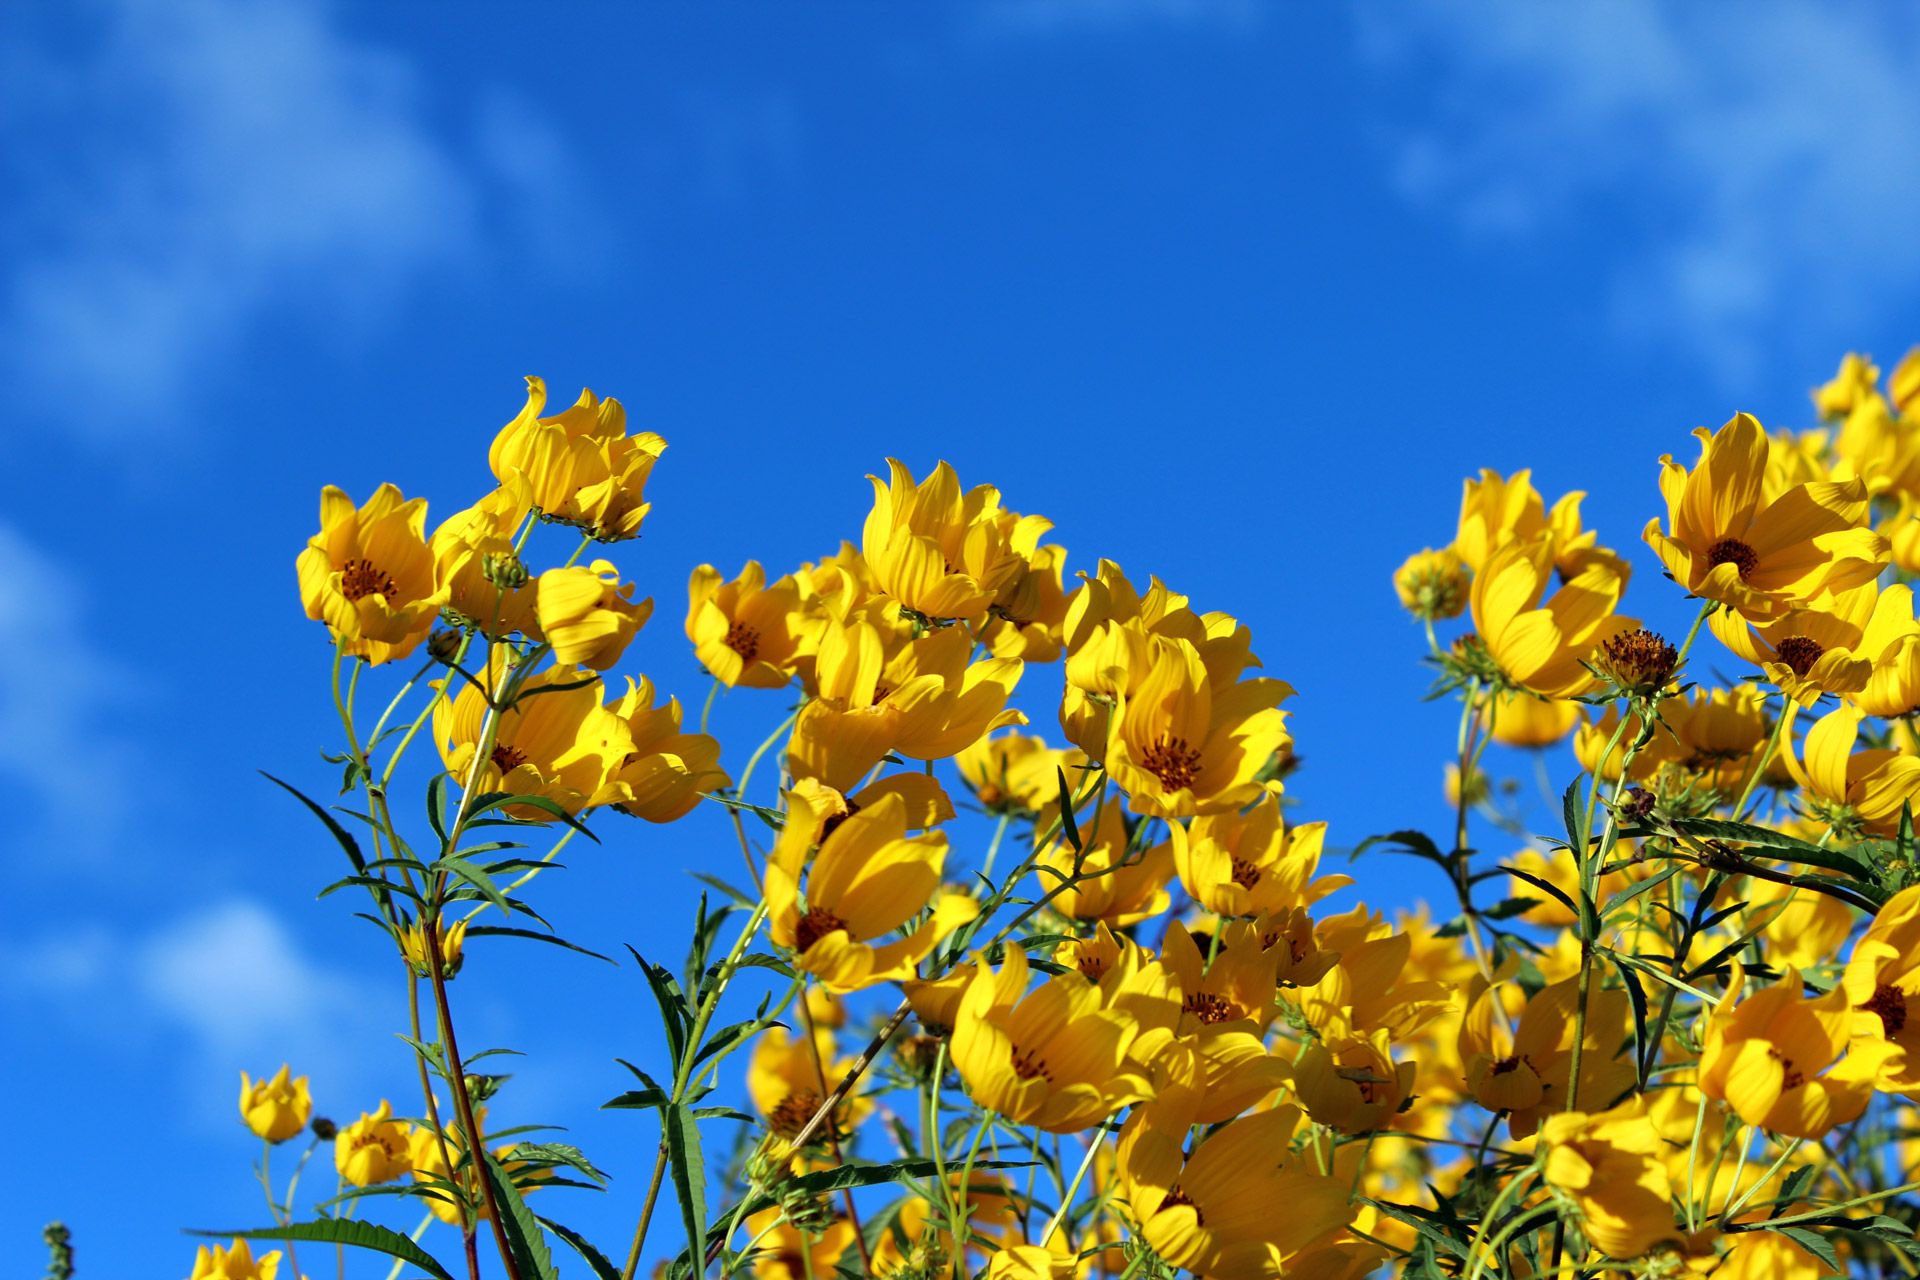 sky and yellow wild flowers.jpg